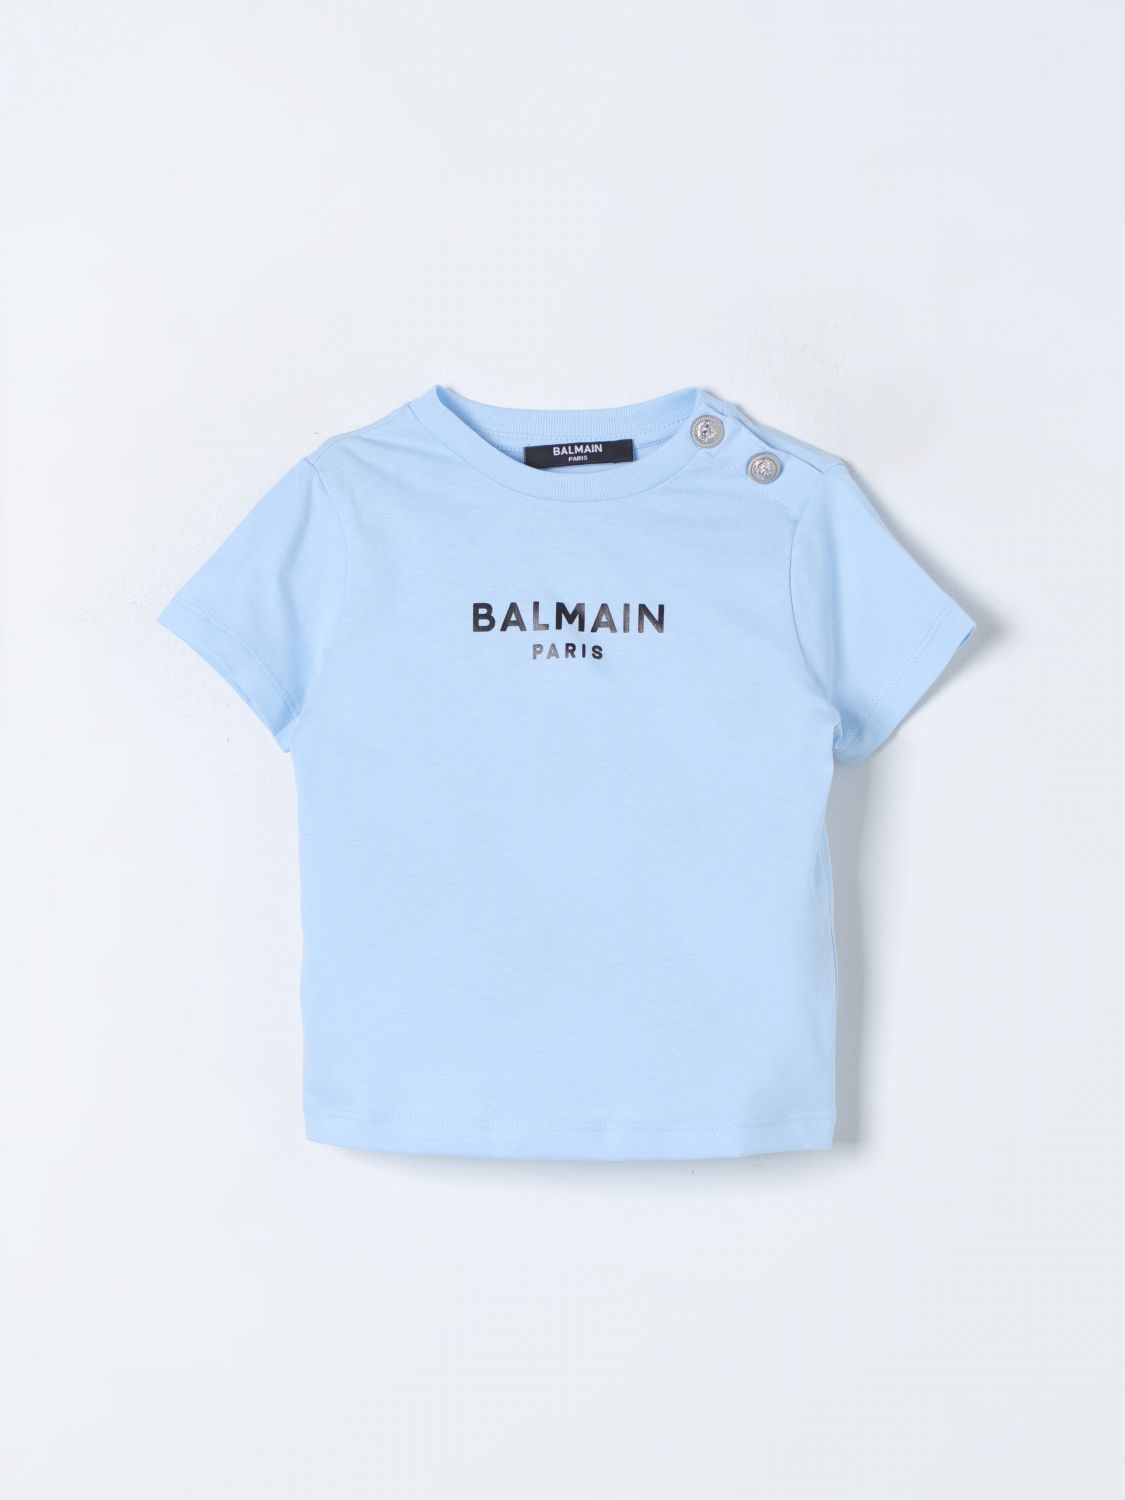 Balmain Babies' T-shirt  Kids Kids Color Gnawed Blue